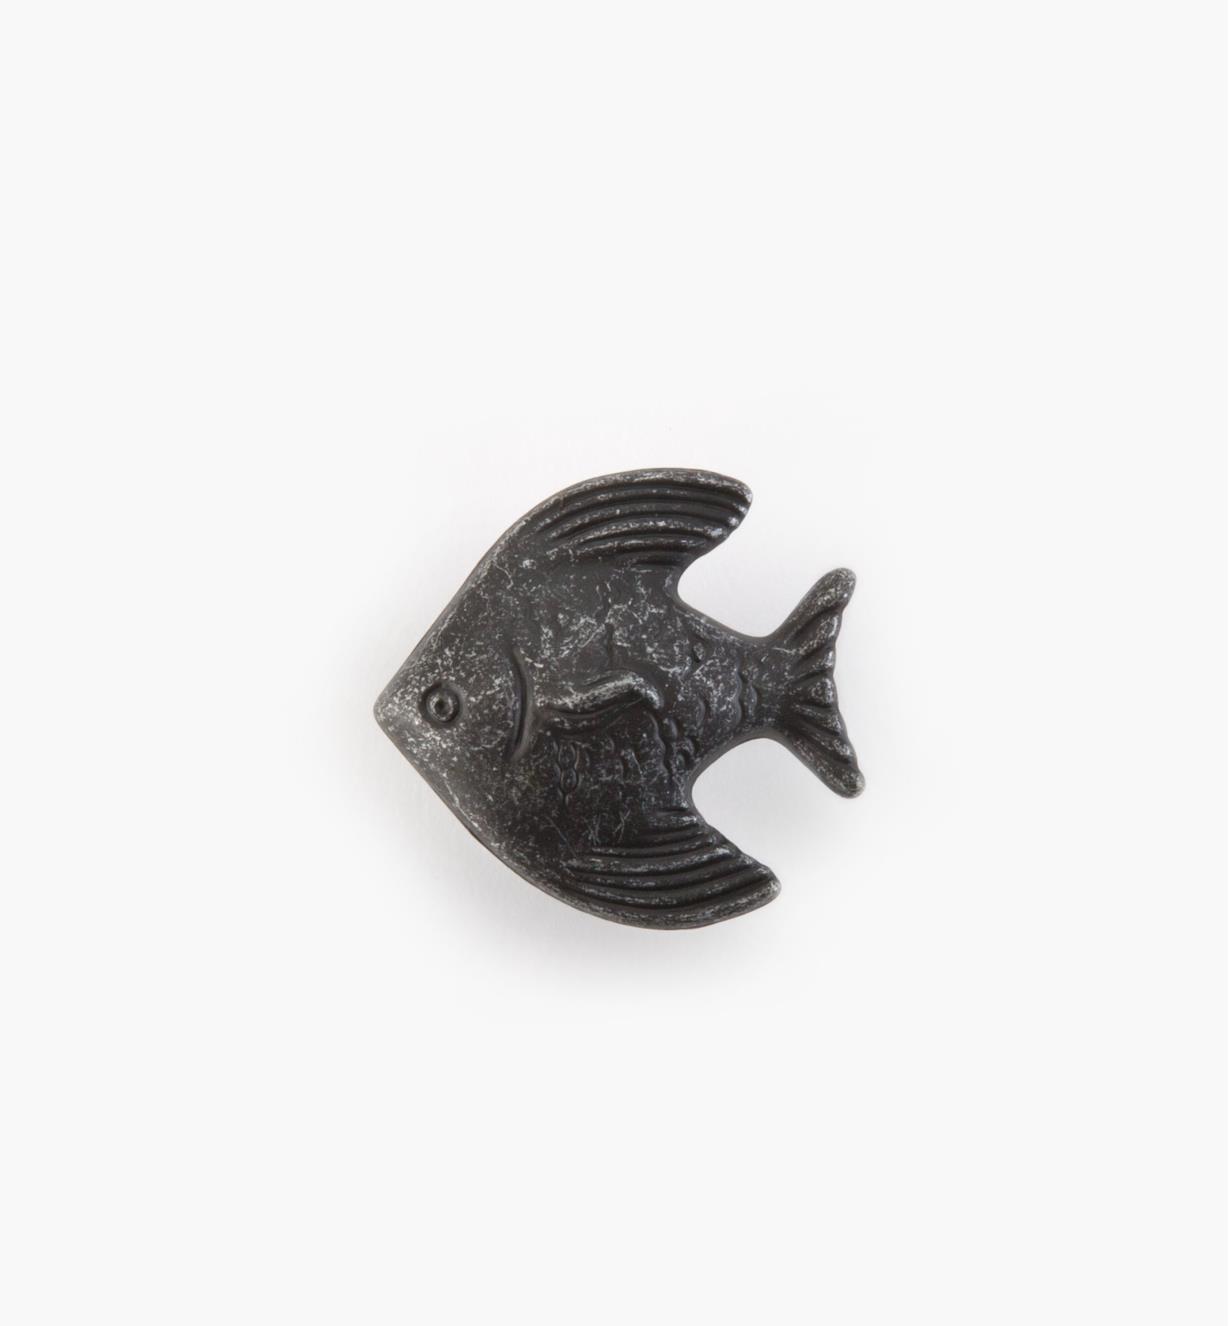 03W2810 - Whimsical 1 1/2" Vibra Pewter Angelfish Knob, each